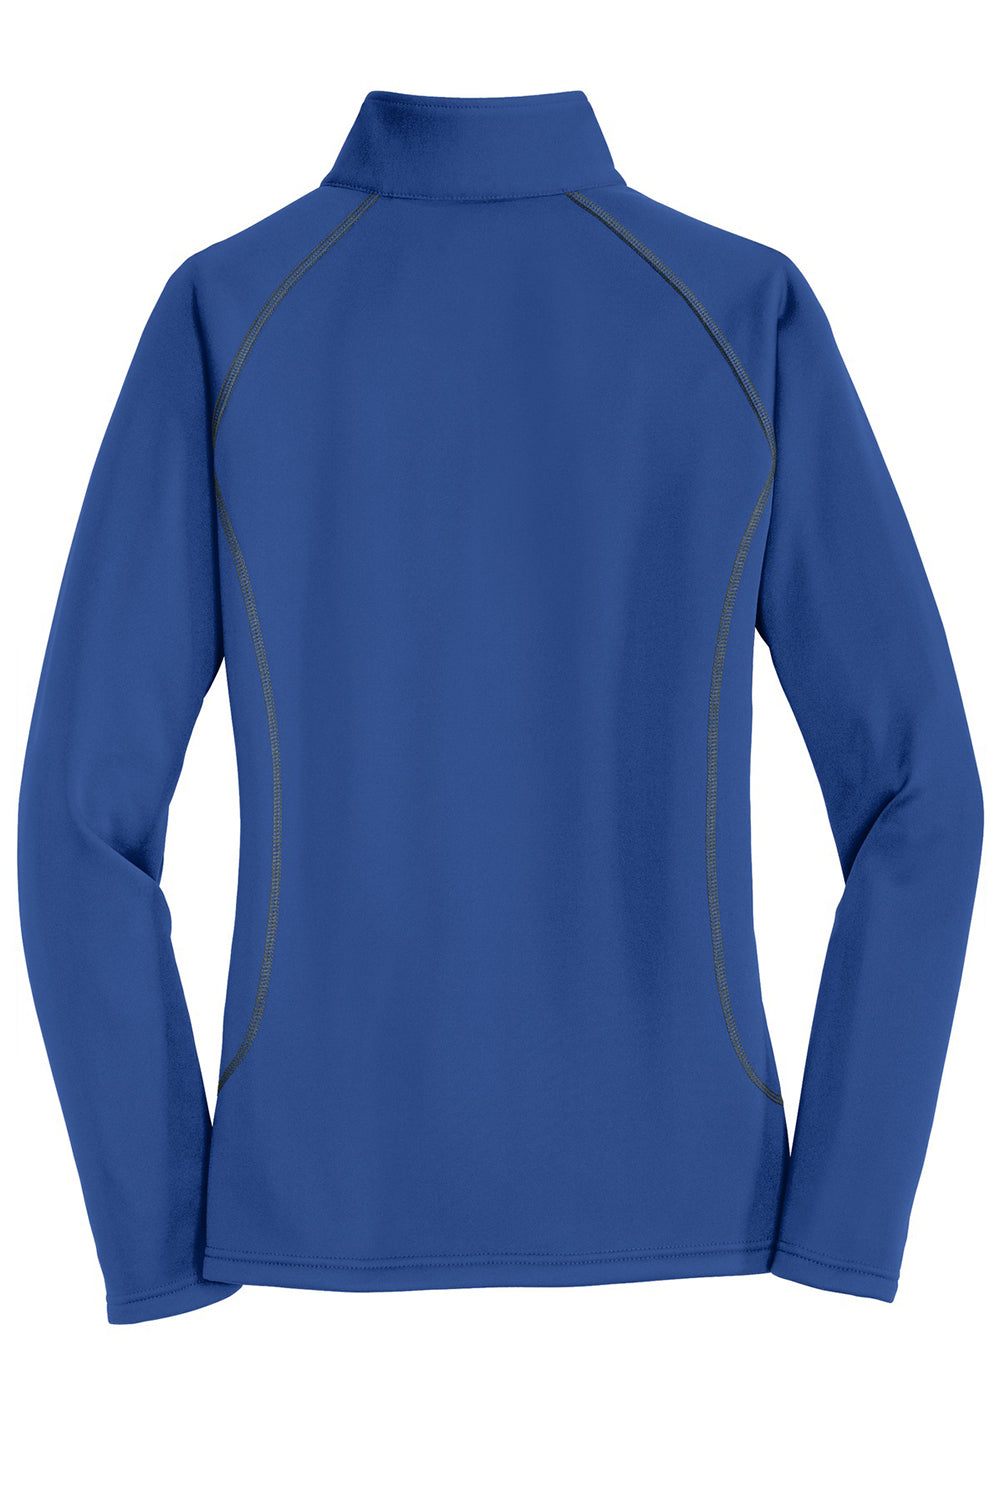 Eddie Bauer EB237 Womens Smooth Fleece 1/4 Zip Sweatshirt Cobalt Blue Flat Back